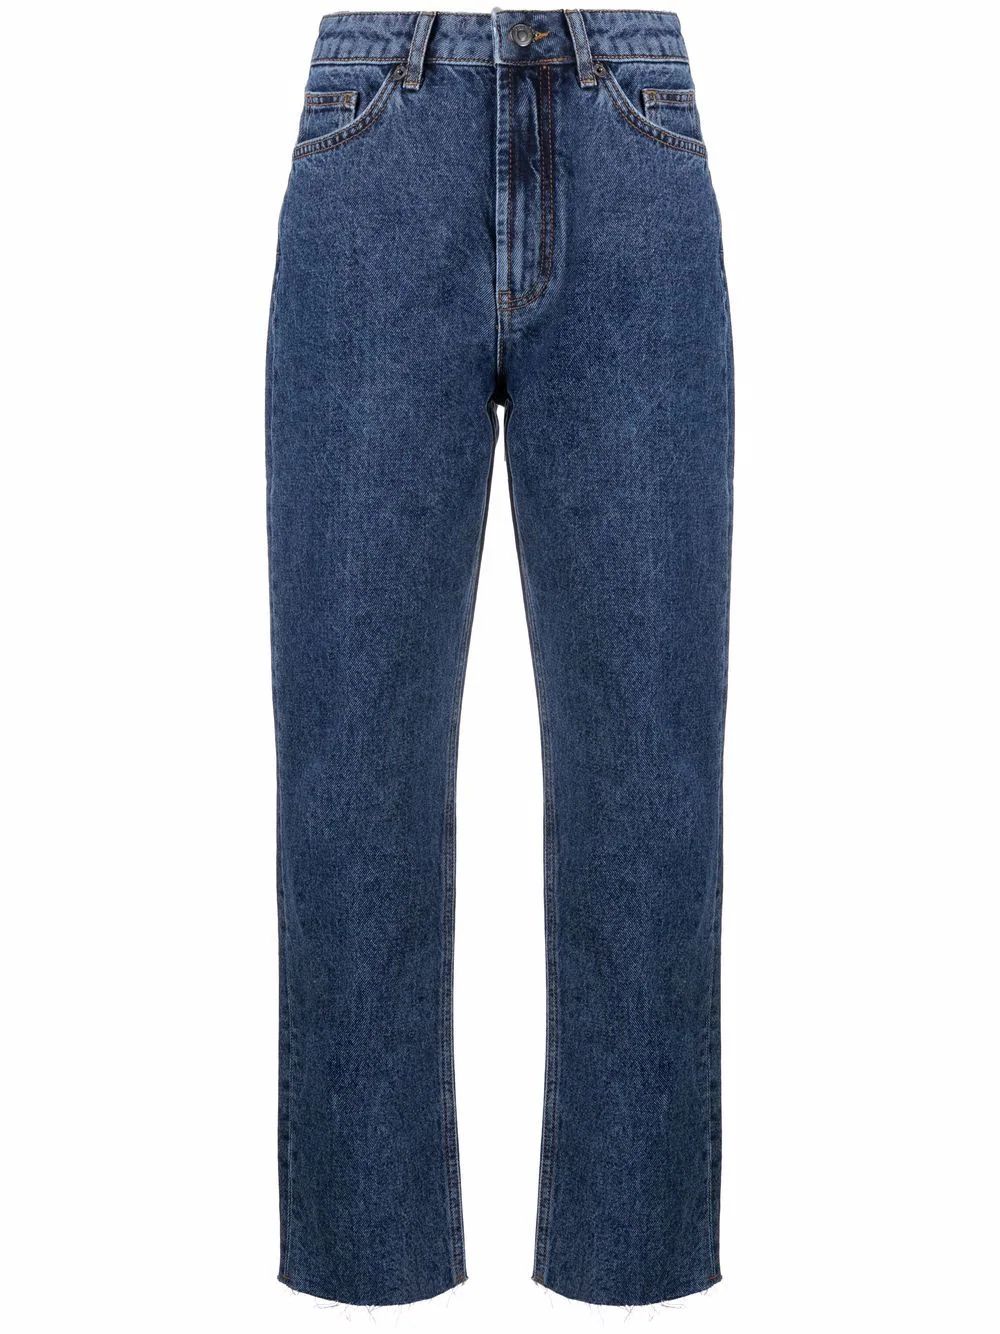 12 STOREEZstraight-leg denim jeans | Farfetch Global